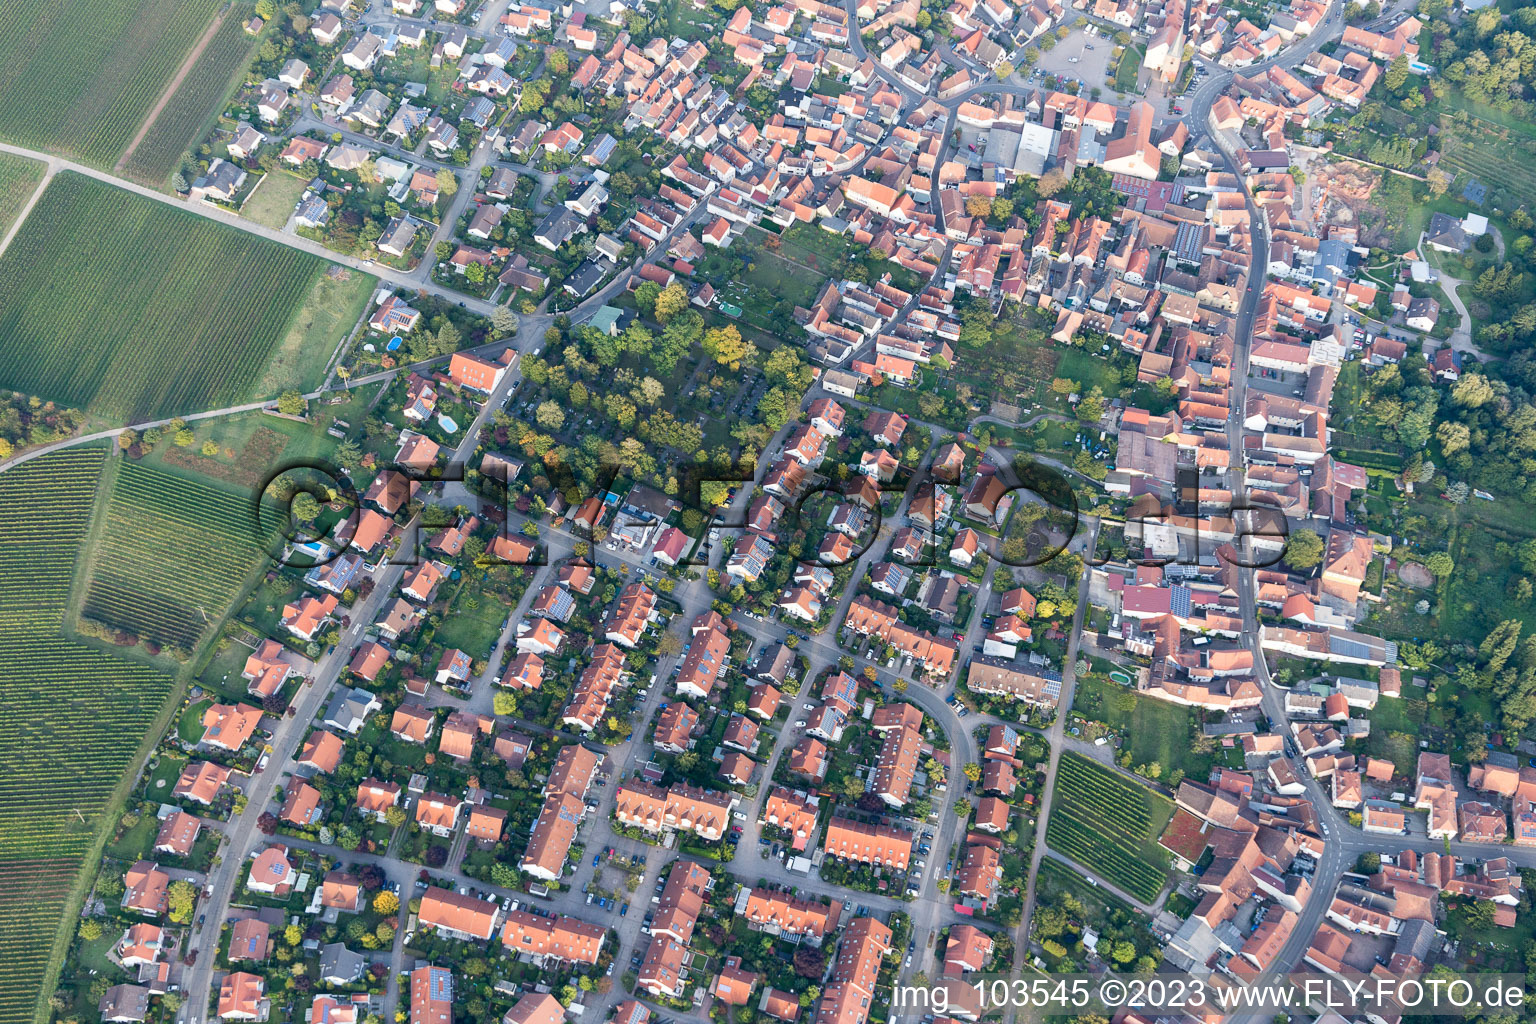 Drone recording of District Godramstein in Landau in der Pfalz in the state Rhineland-Palatinate, Germany